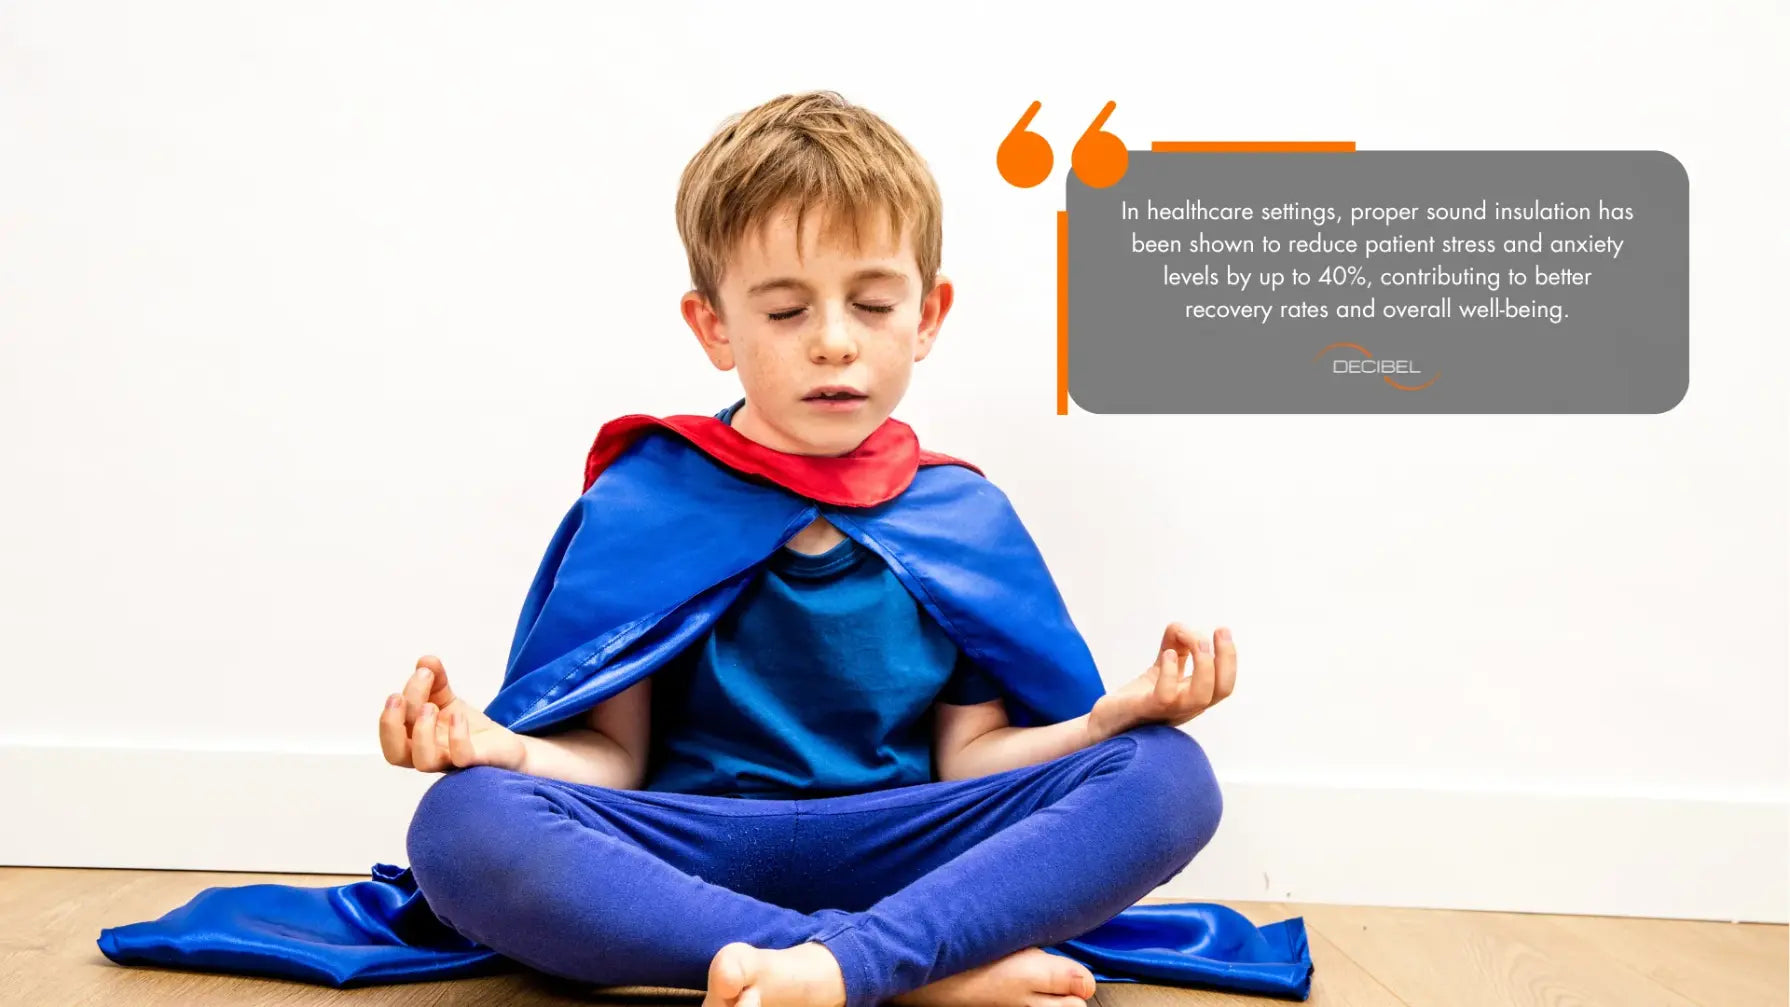 sound-insulation-healthcare-buildings-blog-article-DECIBEL-little-boy-meditating-superman-costume